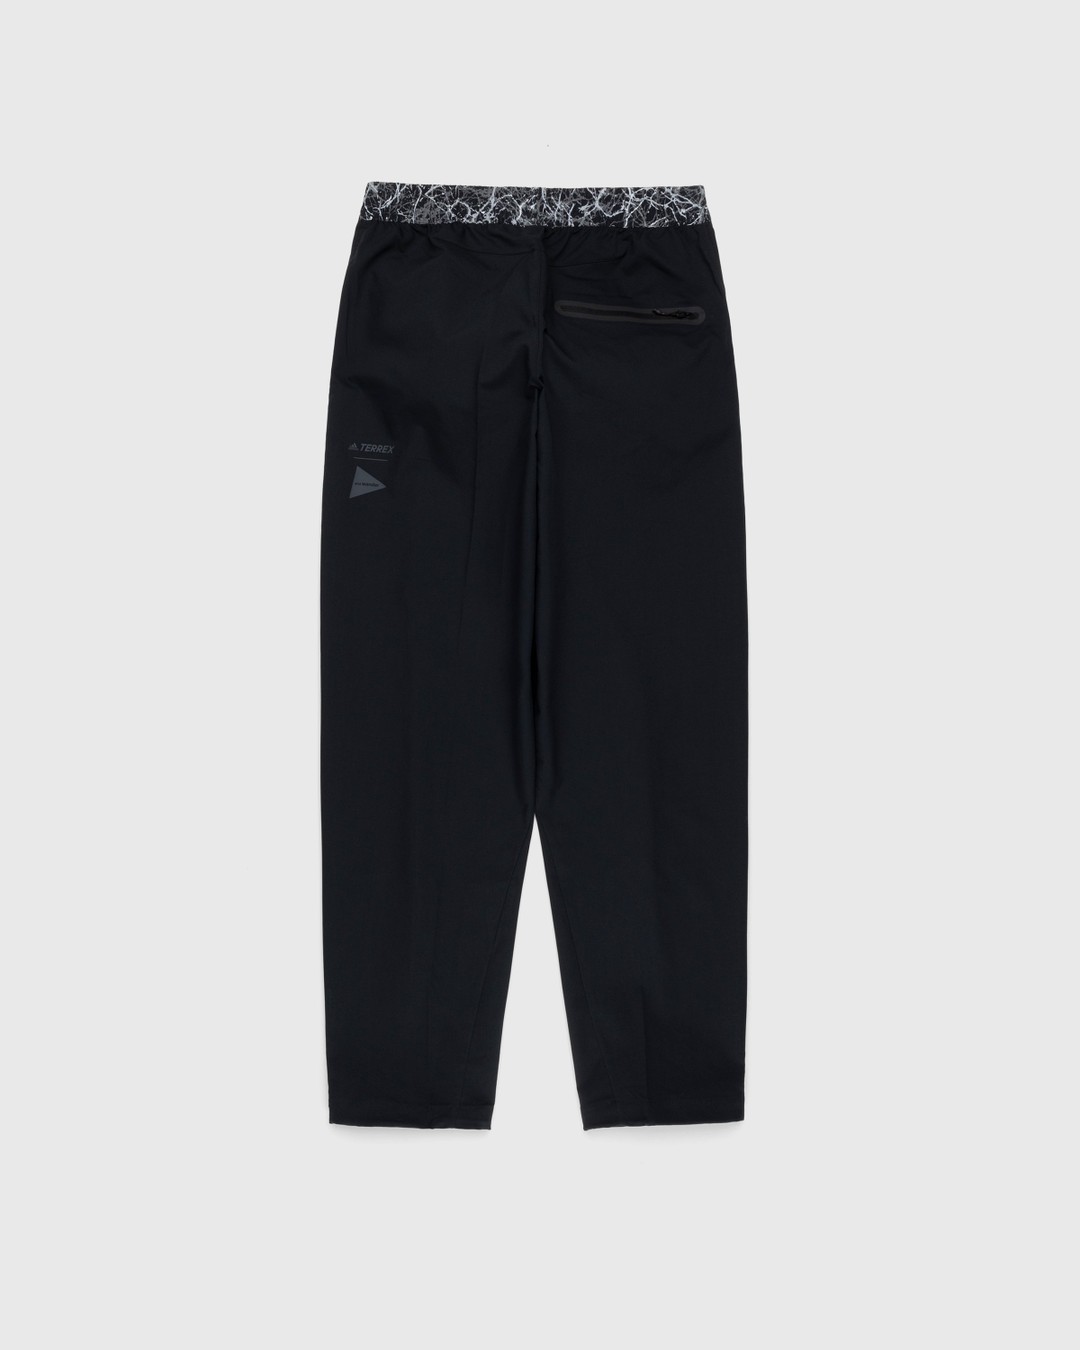 Adidas x And Wander – TERREX Hiking Pants Black - Pants - Black - Image 2